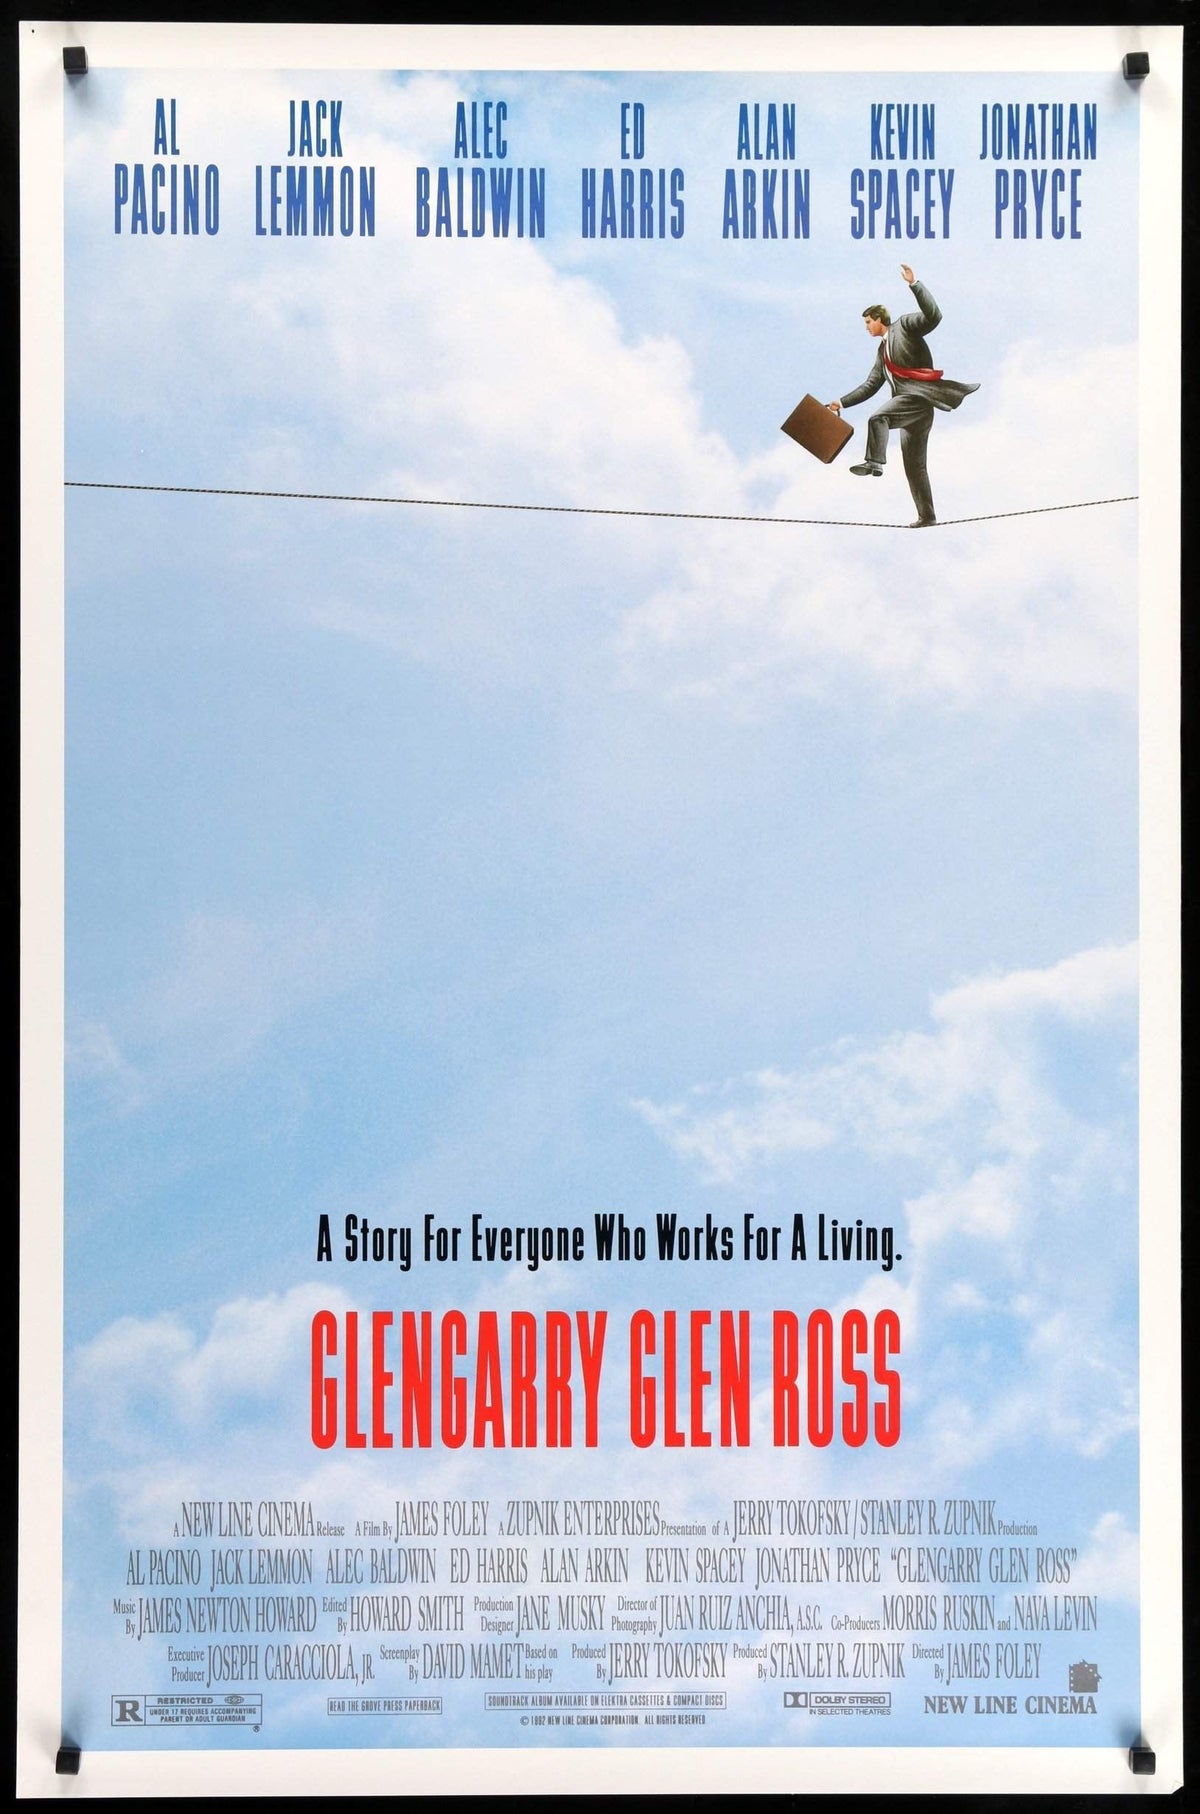 Glengarry Glen Ross (1992) original movie poster for sale at Original Film Art